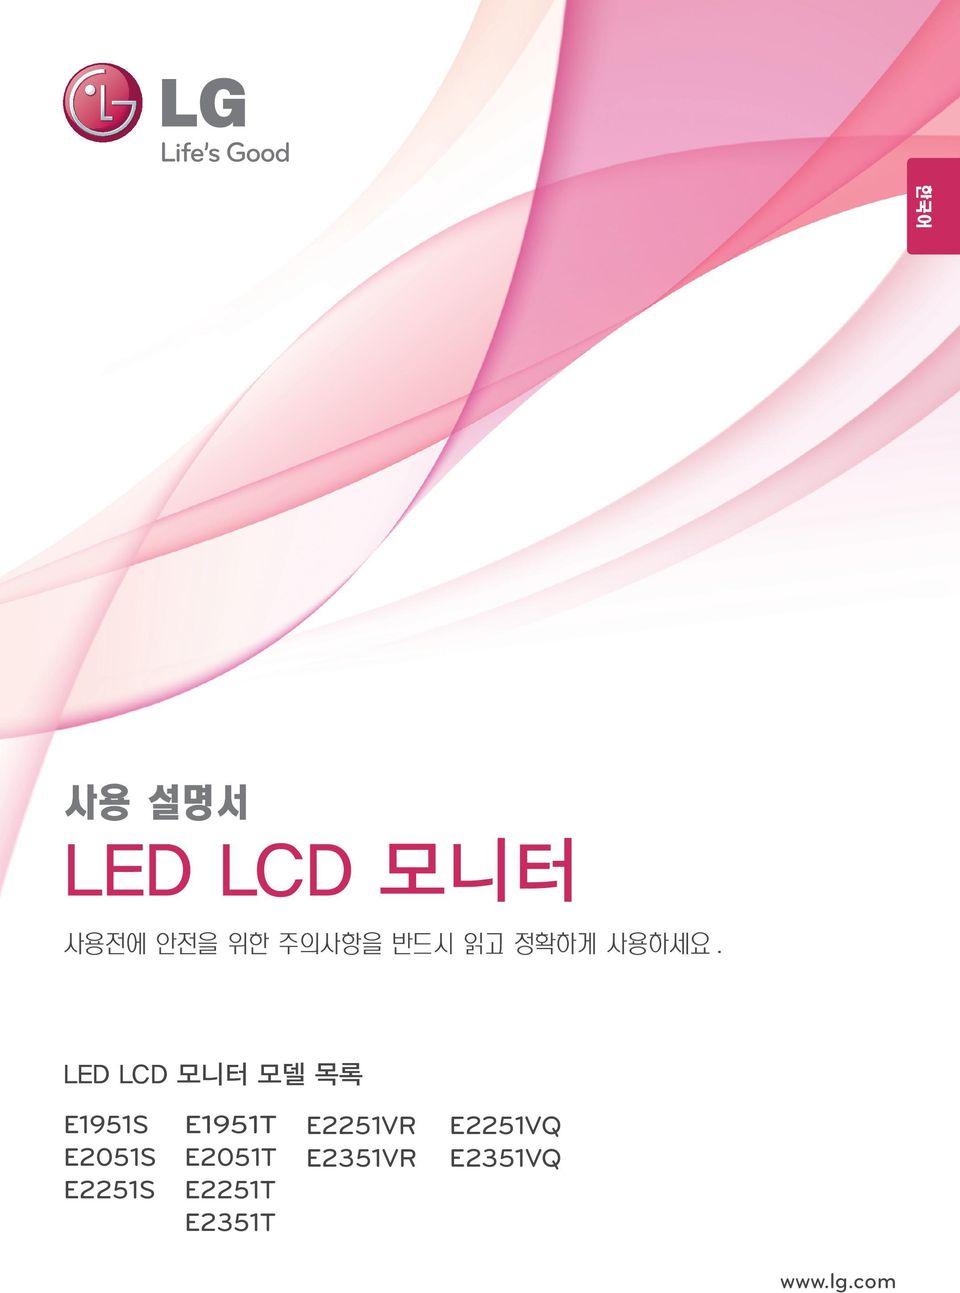 LED LCD 모니터 모델 목록 E1951S E2051S E2251S